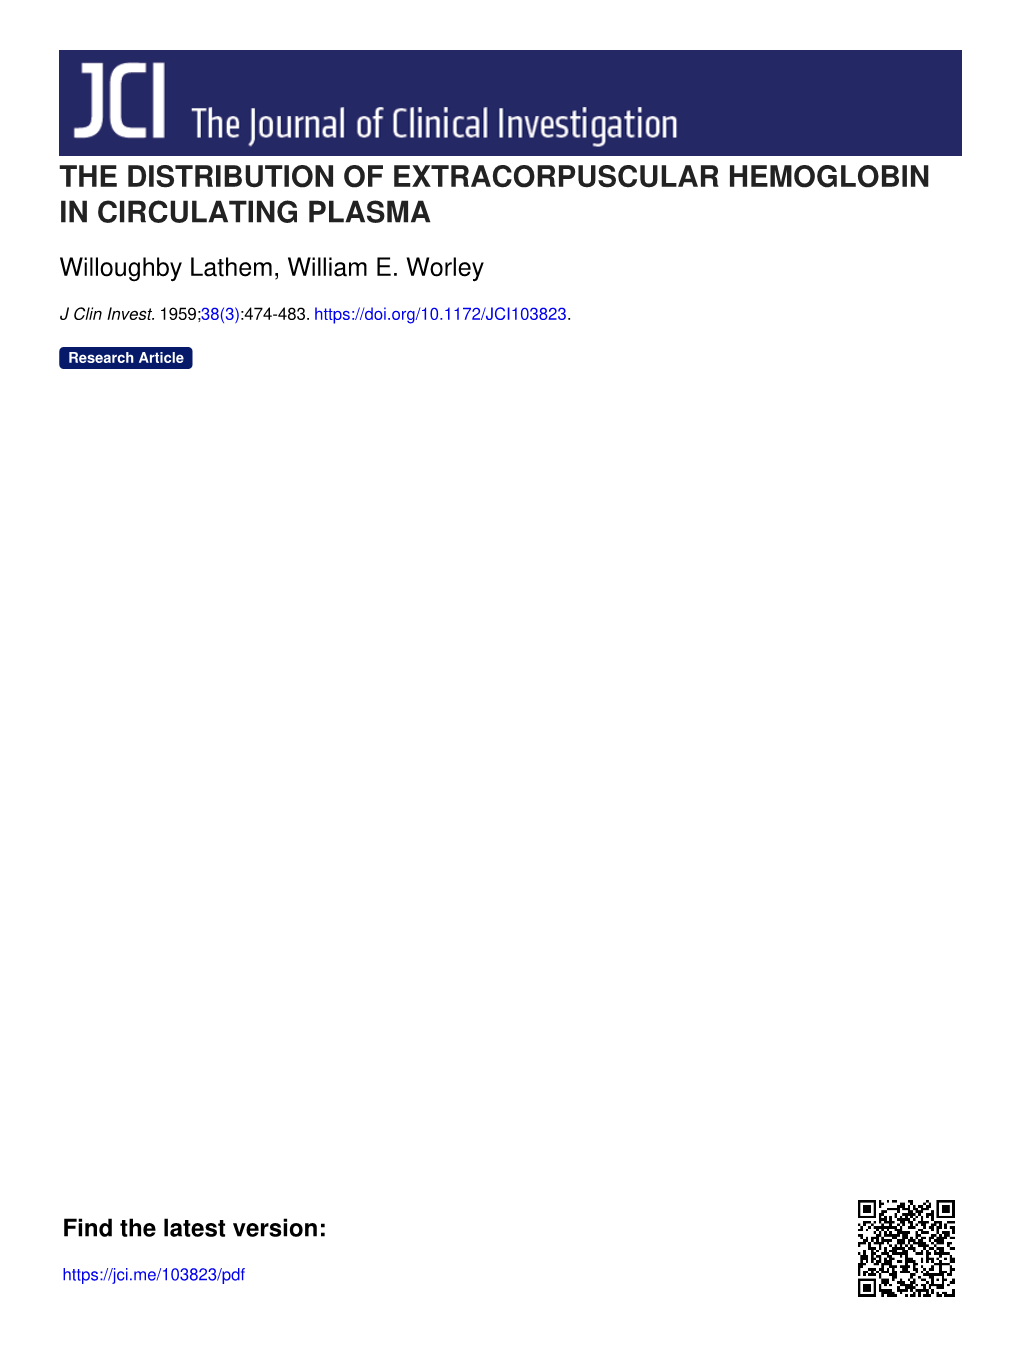 The Distribution of Extracorpuscular Hemoglobin in Circulating Plasma